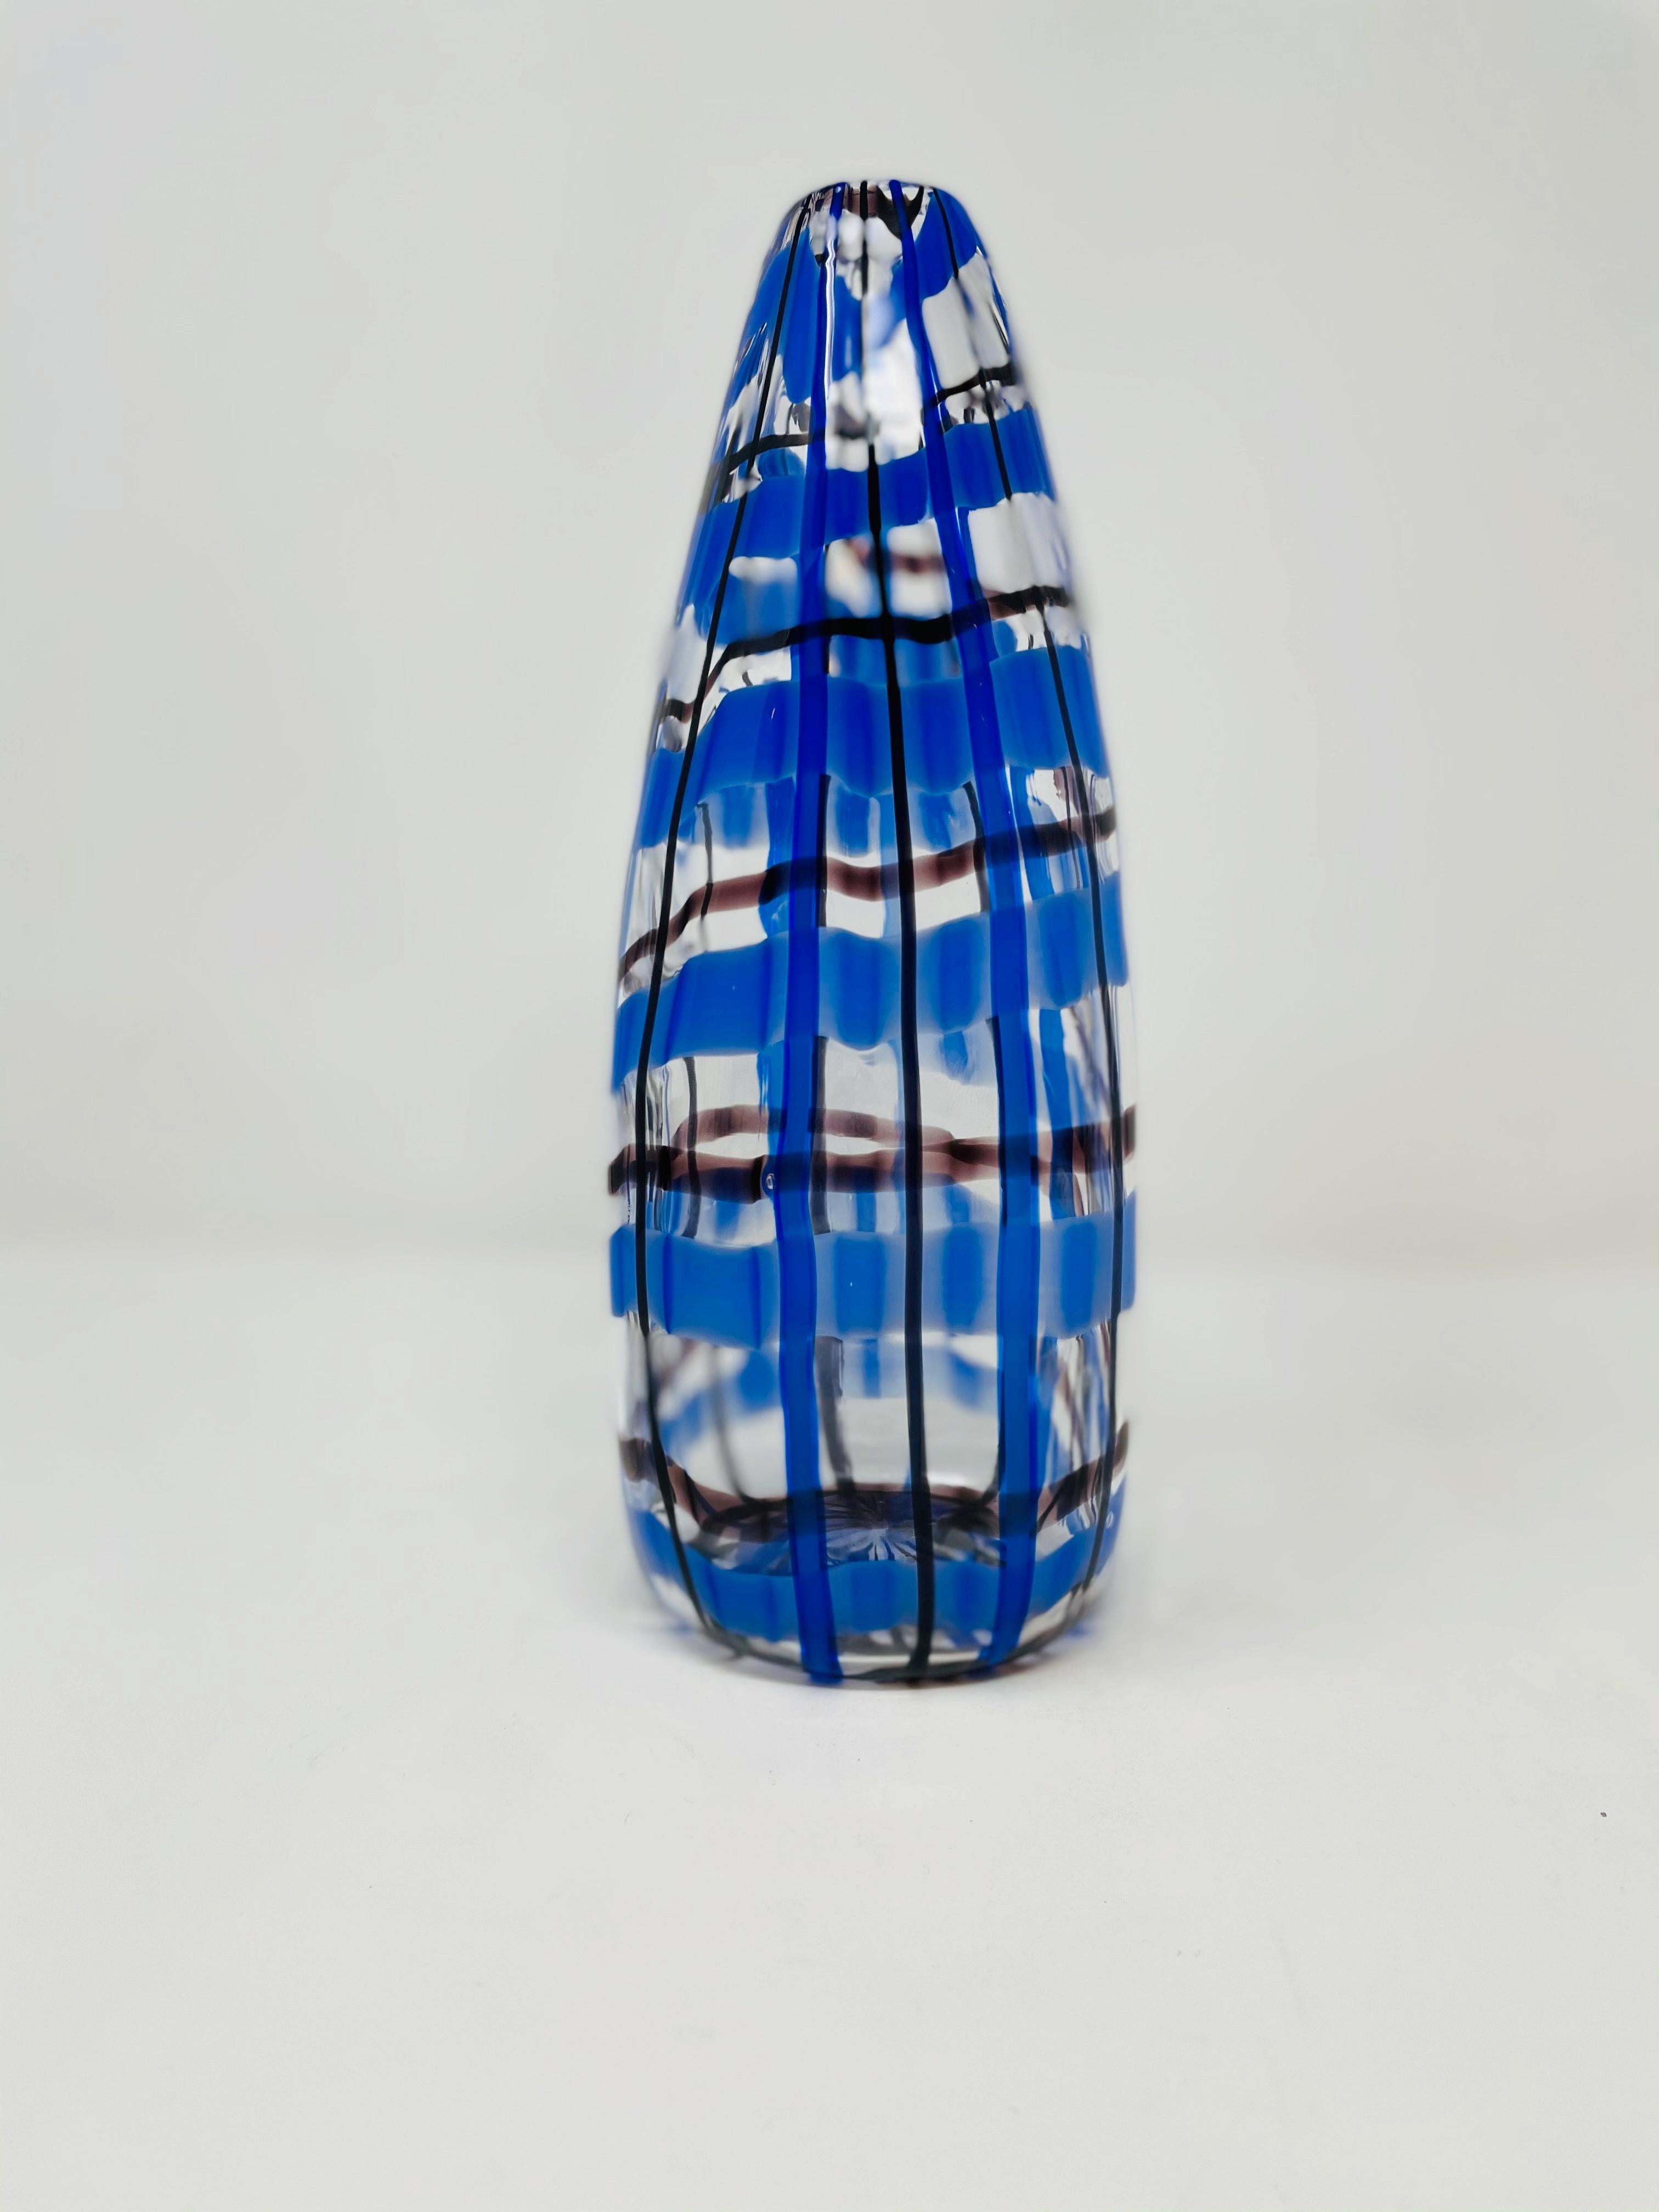 Scozzese vase by Fulvio Bianconi for Venini, 1950s.
     